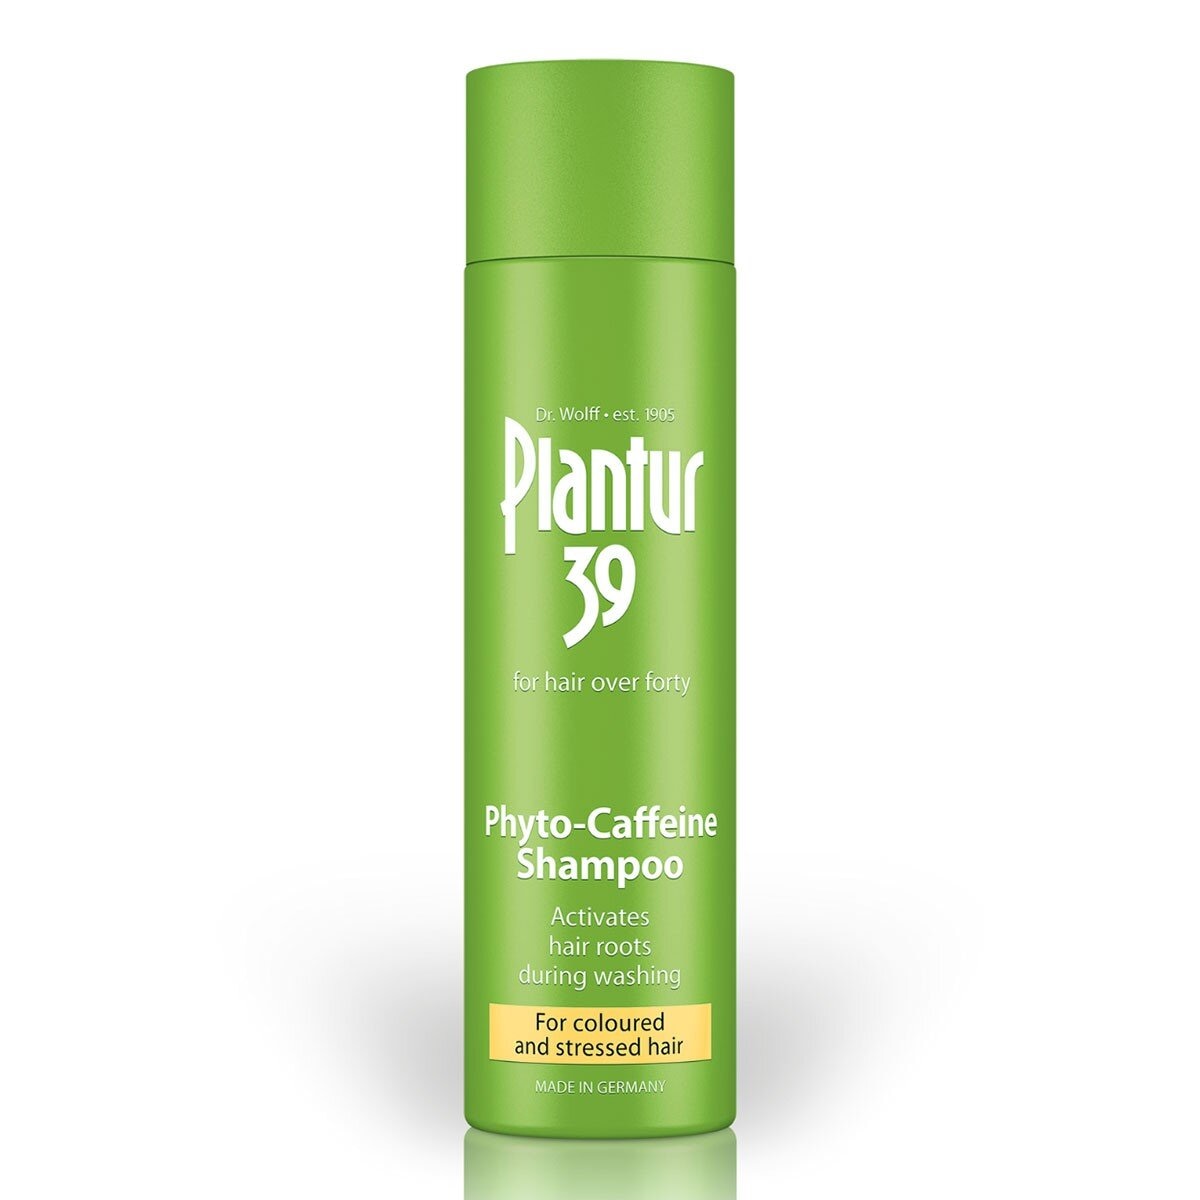 Plantur 39 植物與咖啡因洗髮露 染燙髮適用 250毫升 X 2入 + 頭髮液組合 200毫升 X 1入